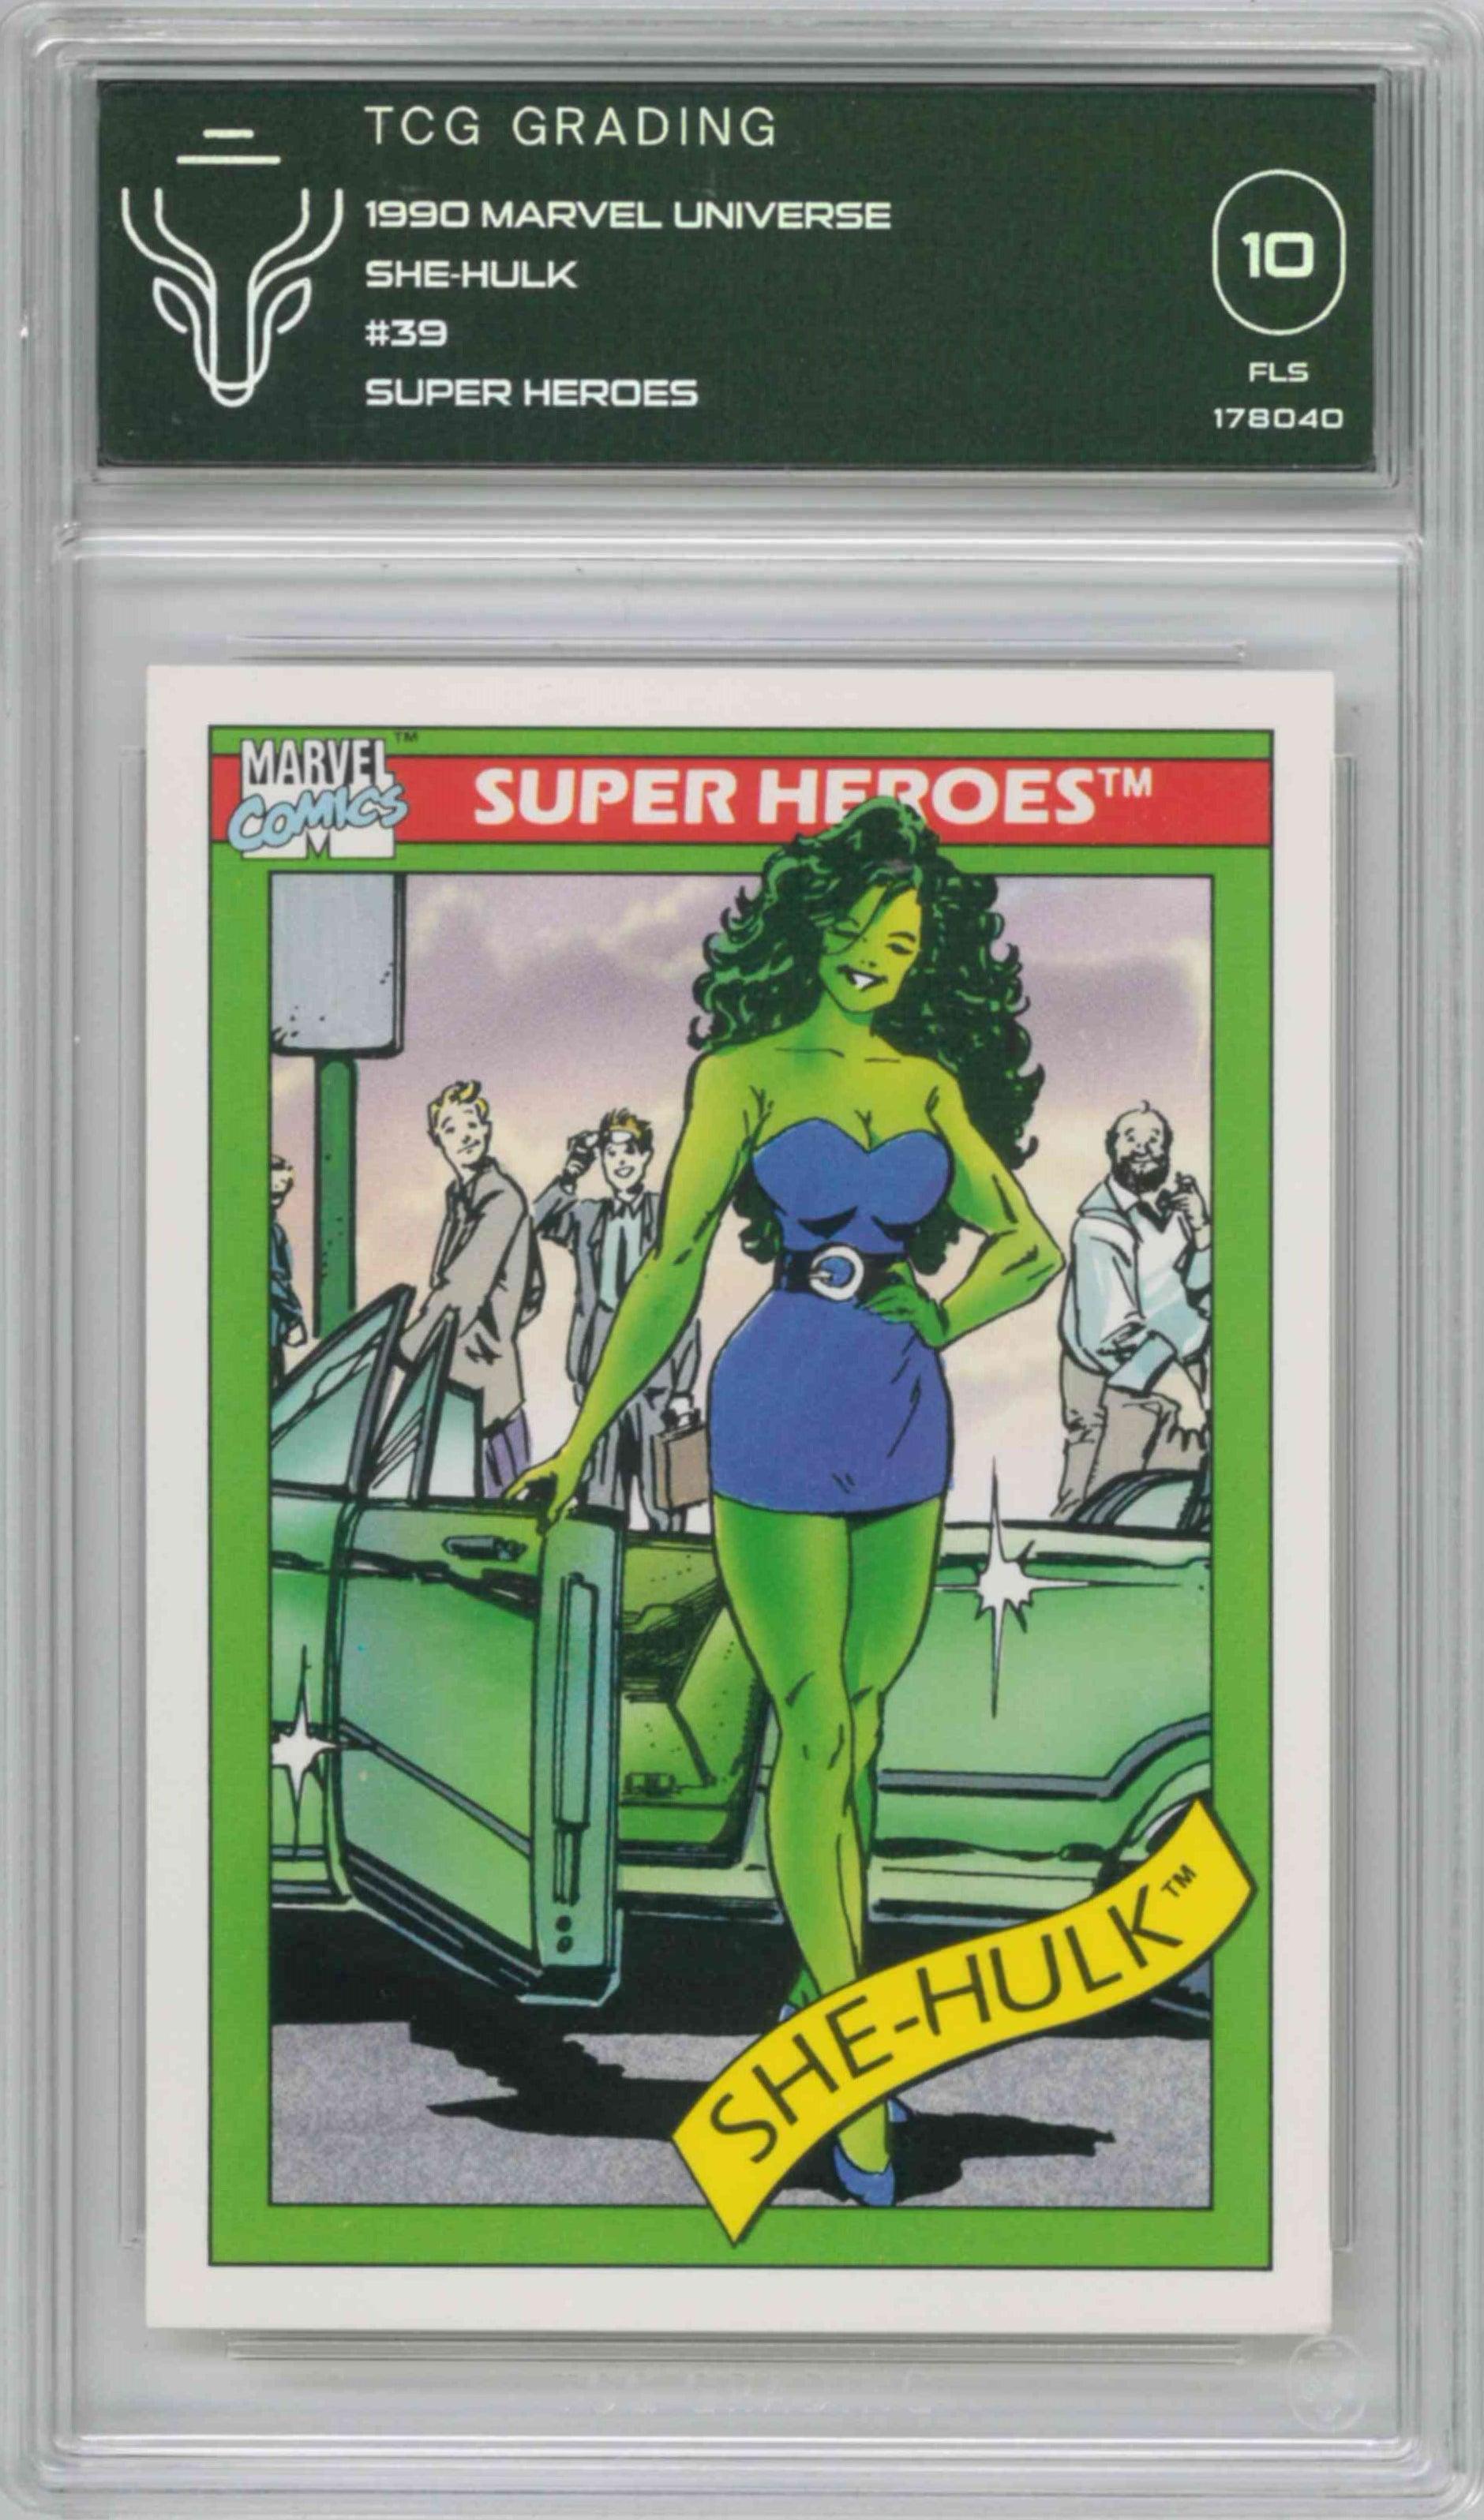 1990 MARVEL UNIVERSE SHE-HULK SUPER HEROES TCG GRADED 10 - Kings Comics